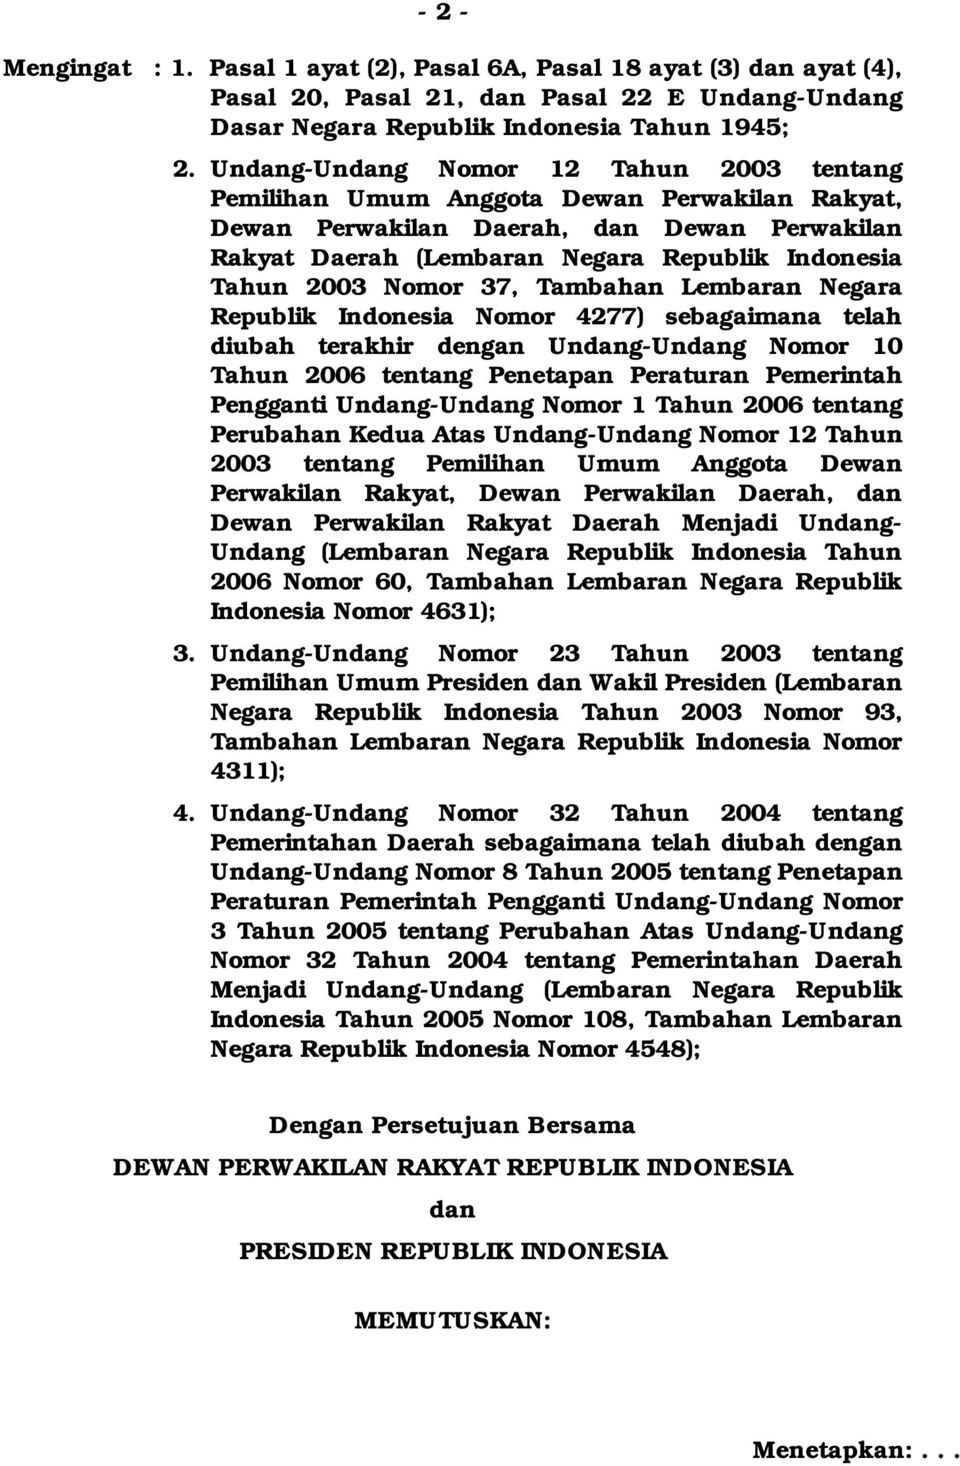 Nomor 37, Tambahan Lembaran Negara Republik Indonesia Nomor 4277) sebagaimana telah diubah terakhir dengan Undang-Undang Nomor 10 Tahun 2006 tentang Penetapan Peraturan Pemerintah Pengganti